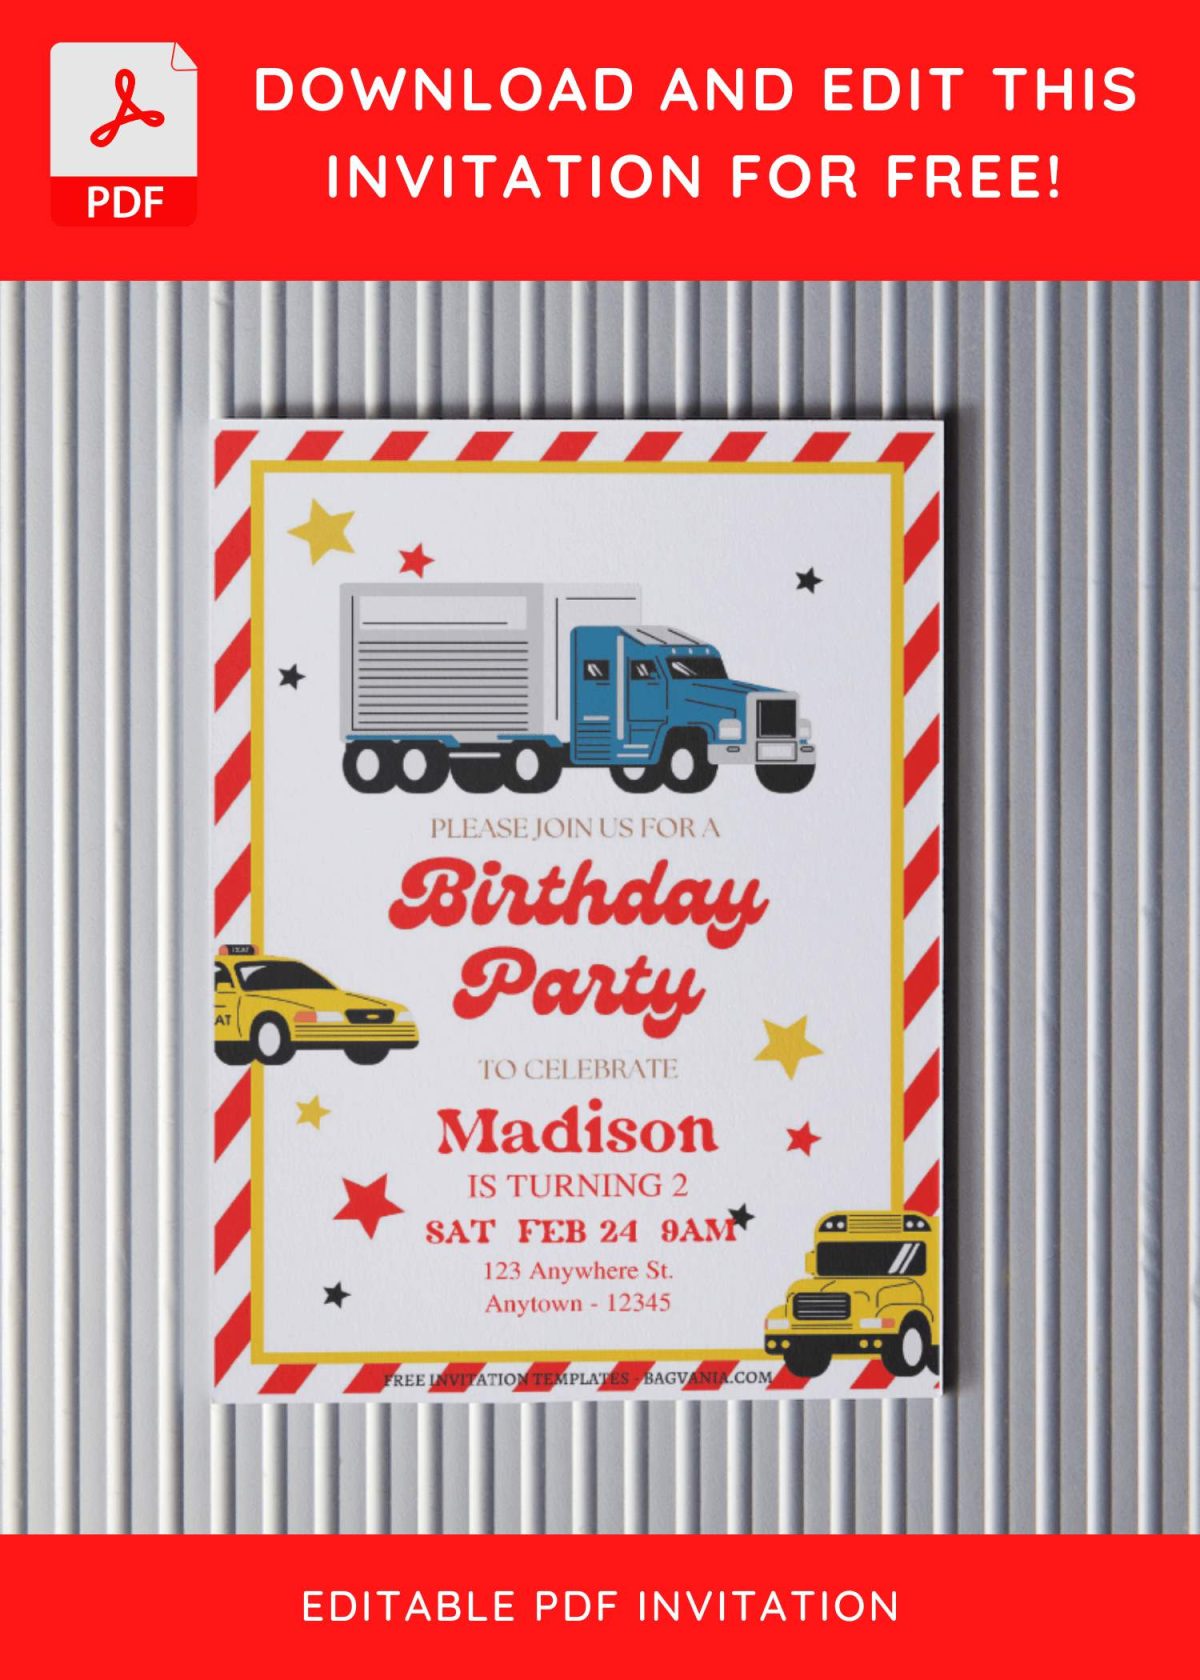 (Free Editable PDF) Simple Transportation Themed Birthday Invitation Templates D